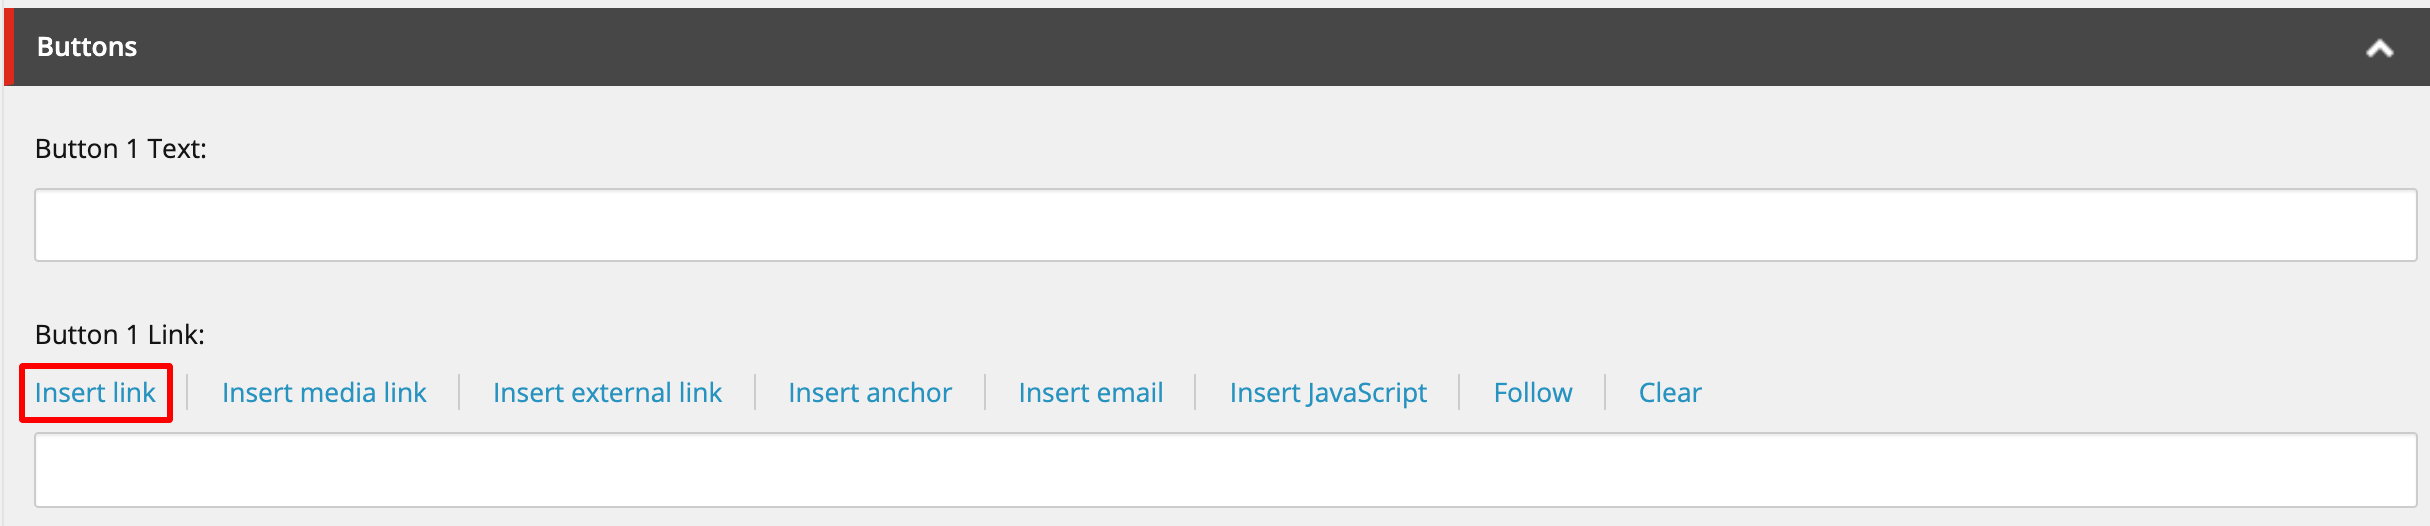 screenshot of internal link feature in sitecore